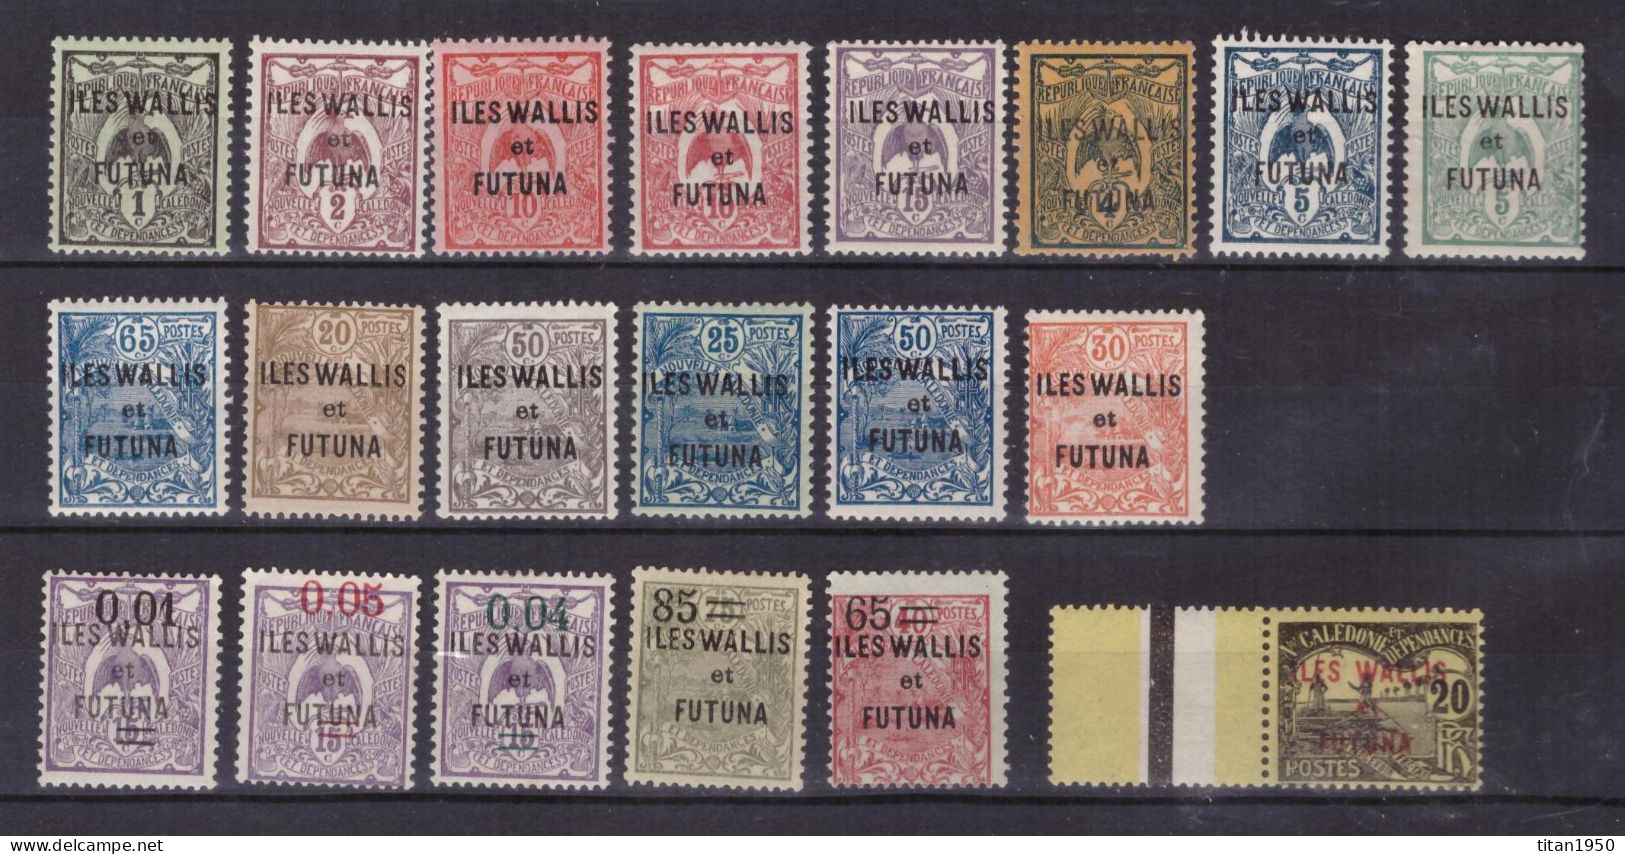 Wallis & Futuna - Cagou - Lot De 20 Timbres Neufs **  / * / O -  Cote 57 € - Unused Stamps